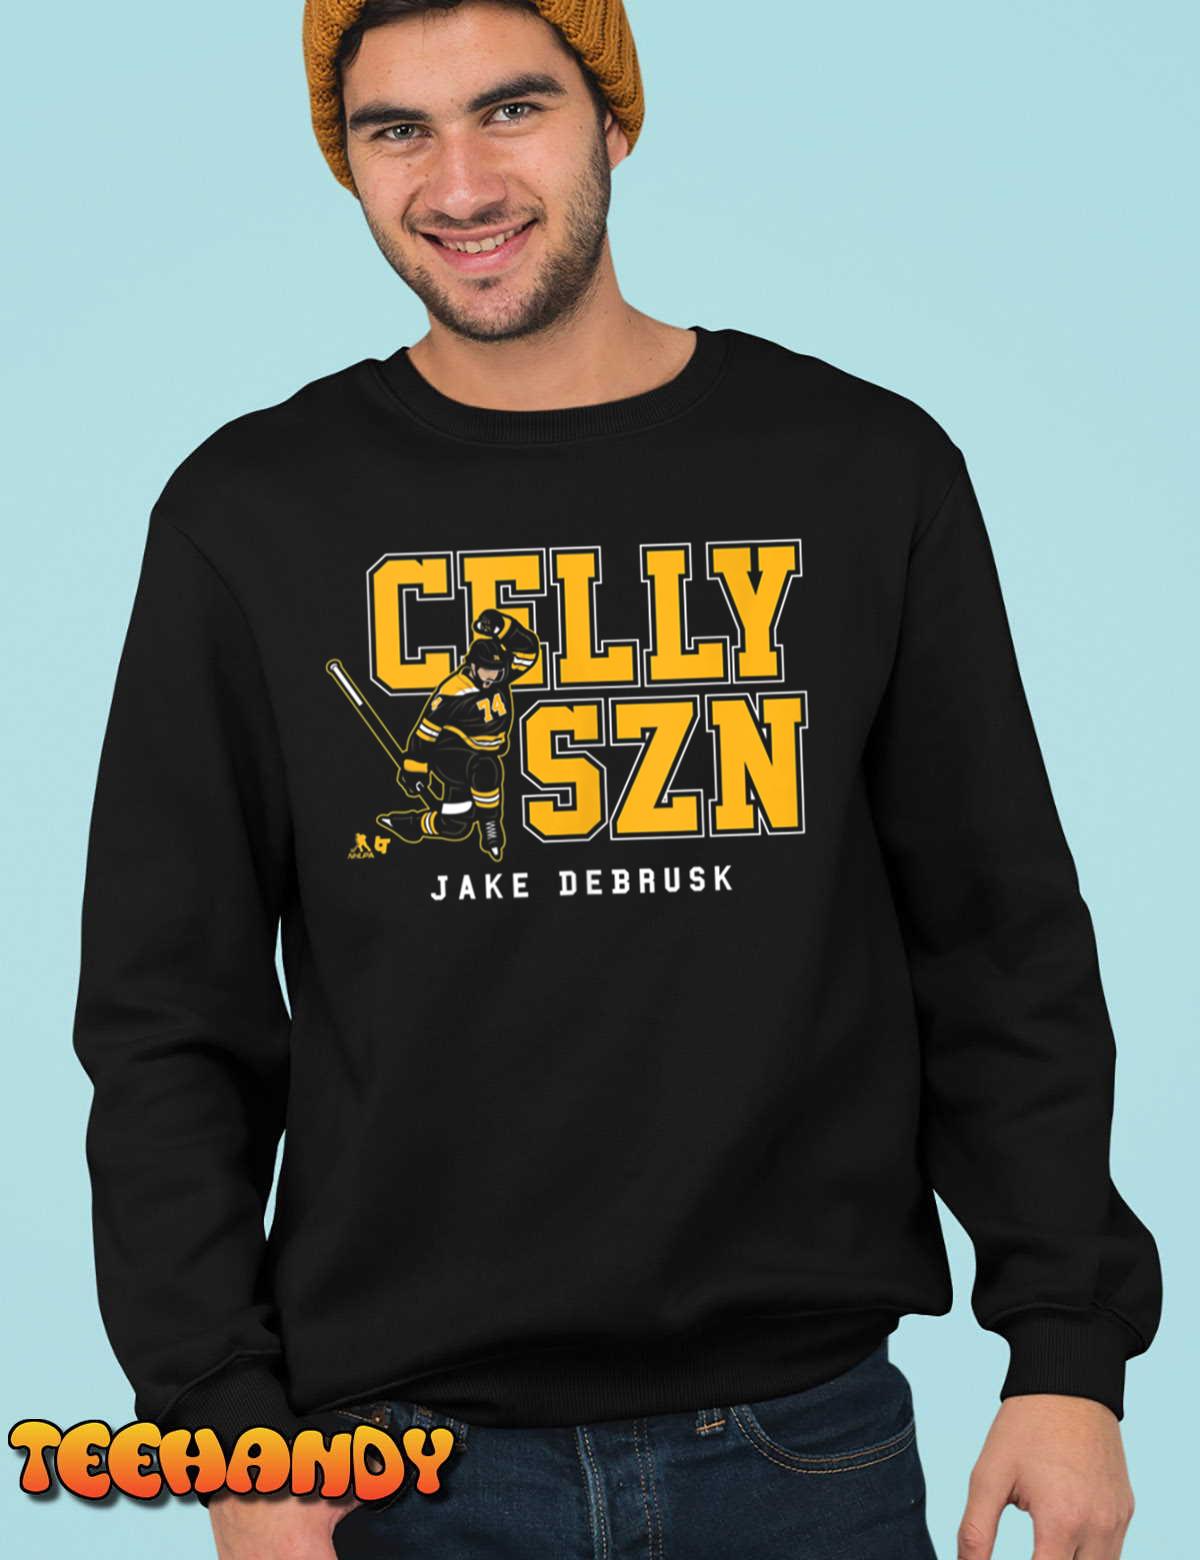 Jake DeBrusk Celly SZN – Boston Hockey Tank Top